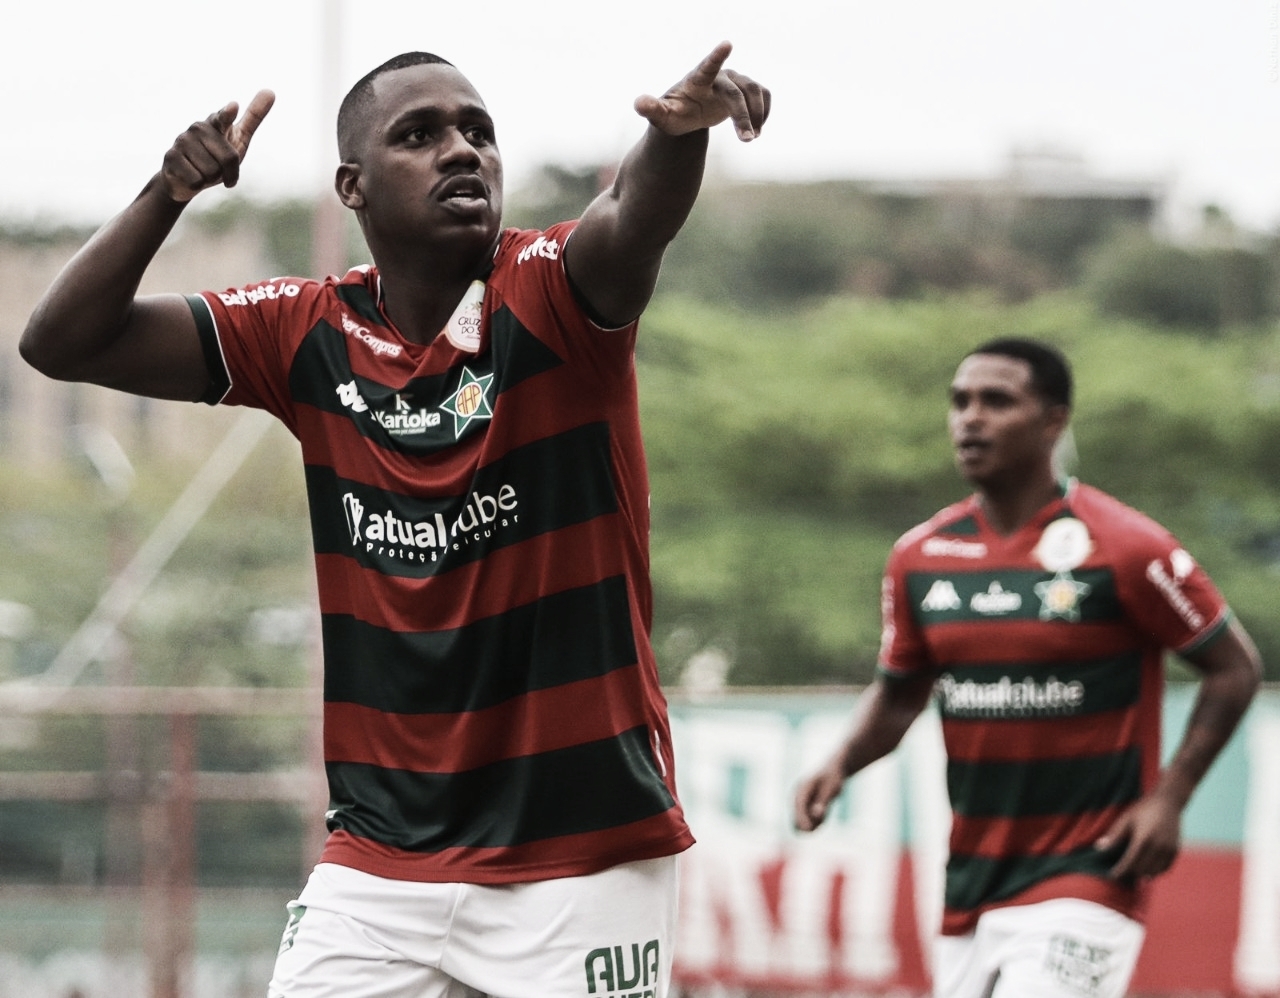 De contrato renovado com a Portuguesa-RJ, Cafu projeta 2023 no clube: “Brigar por grandes objetivos”